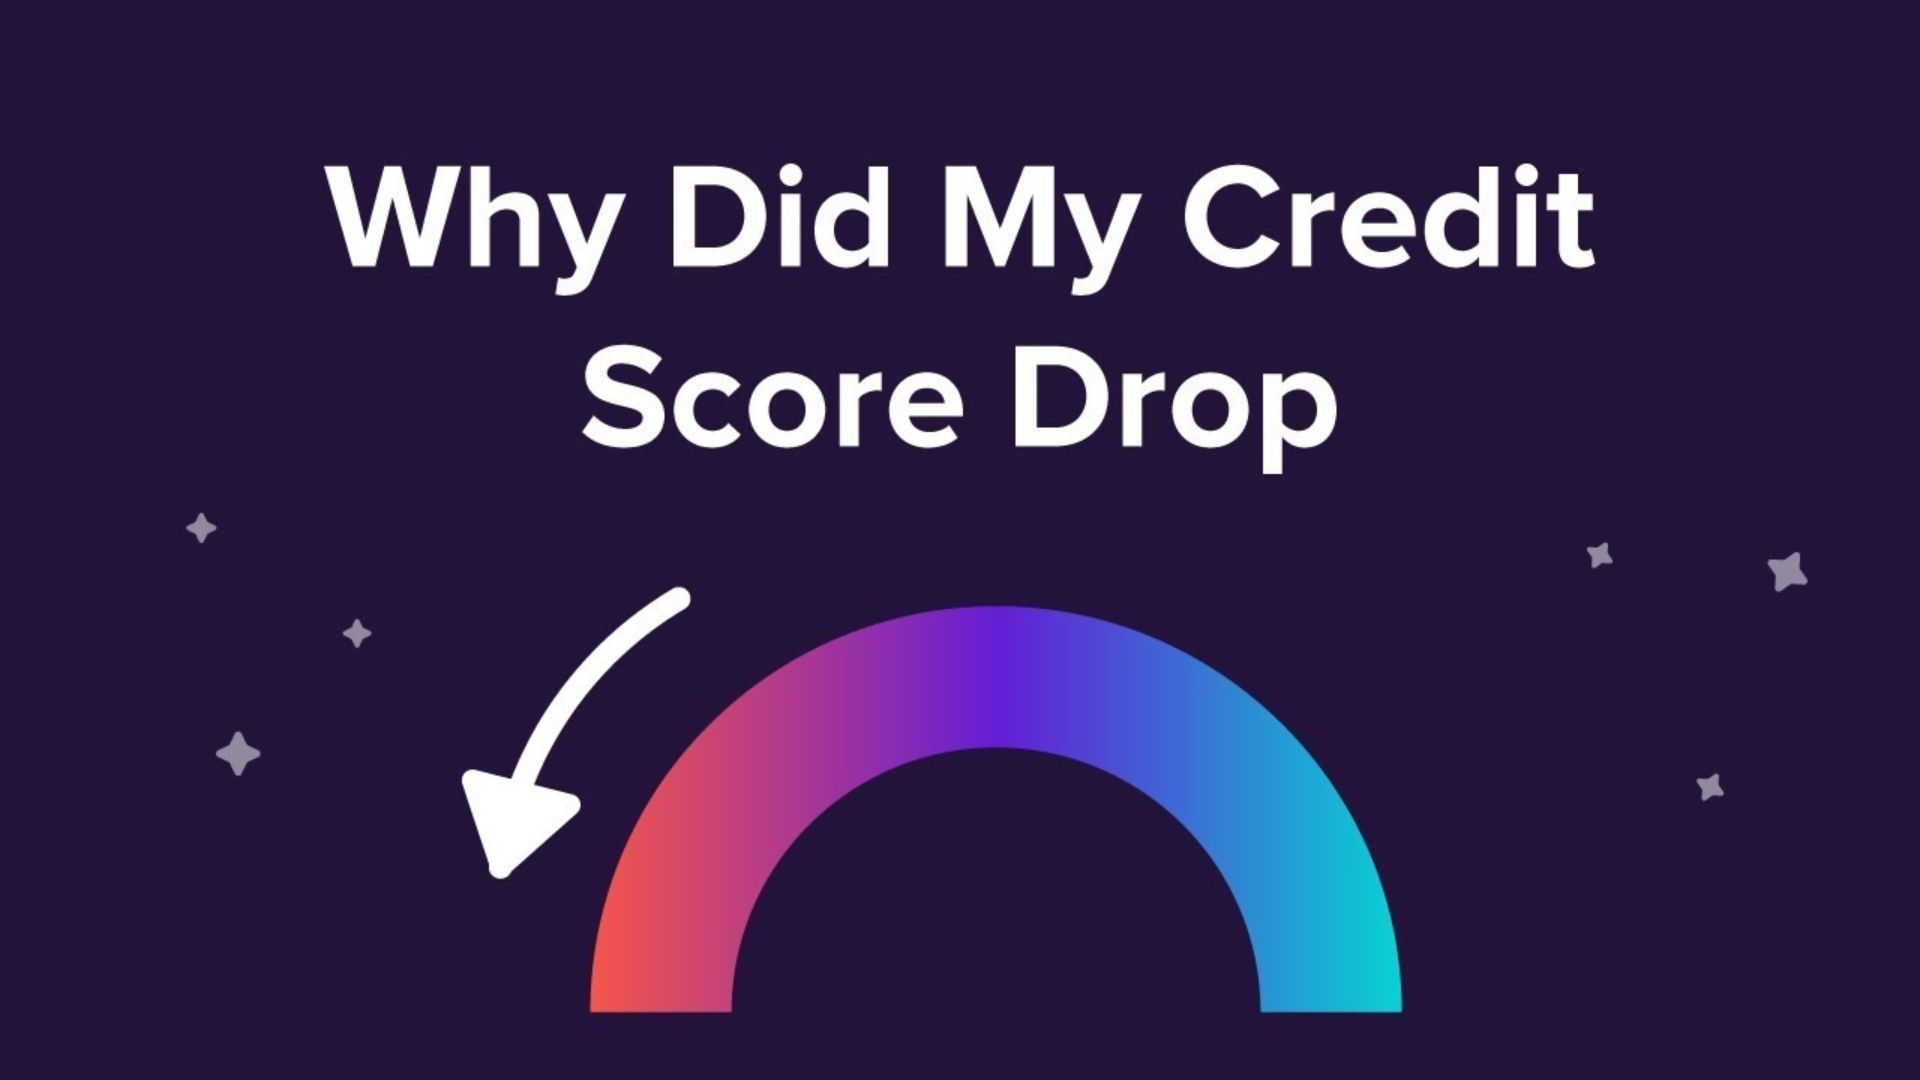 Credit Score Drop for No Reason